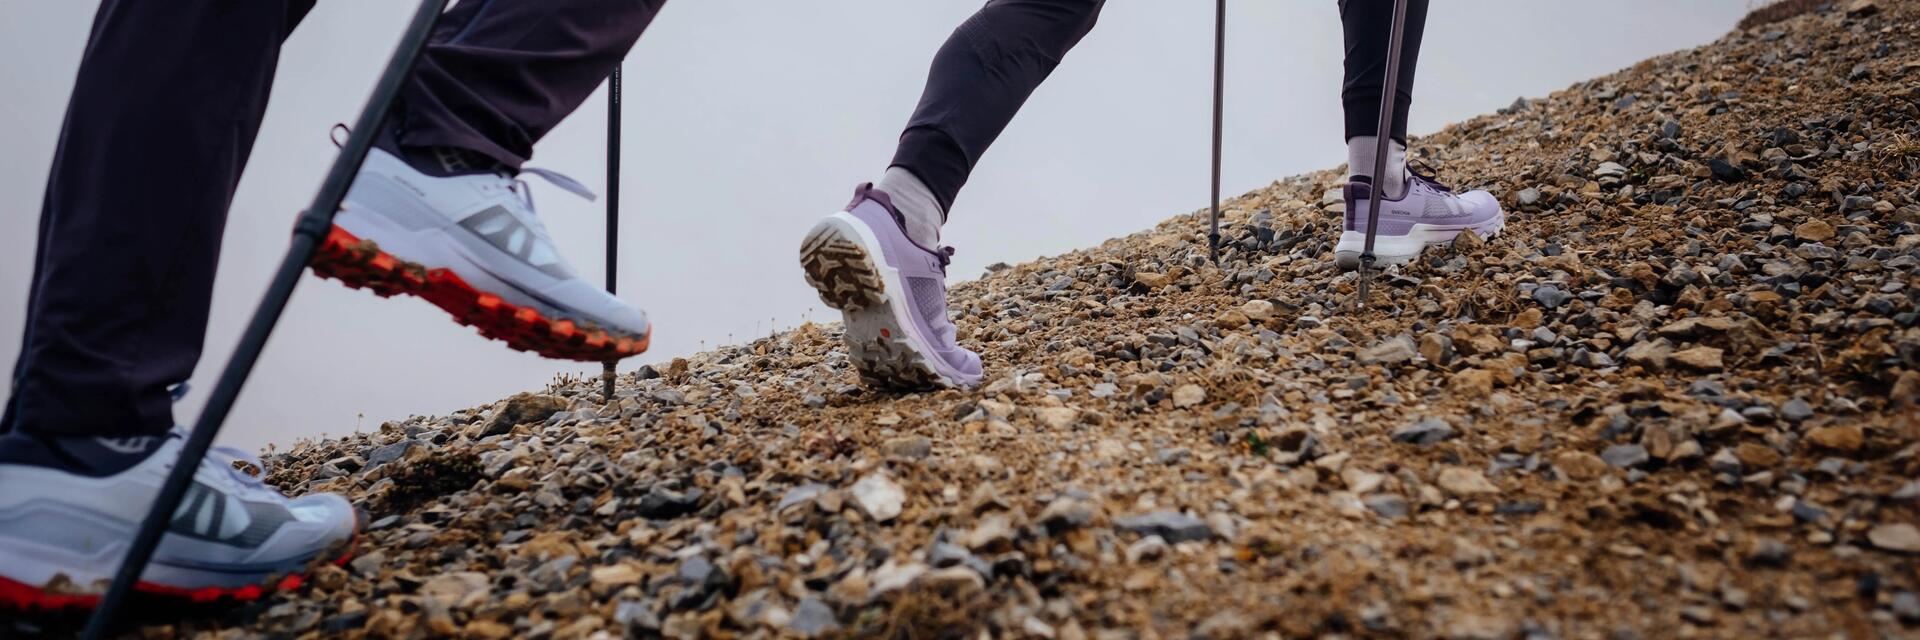 Hiking shoes - women sensitive feet